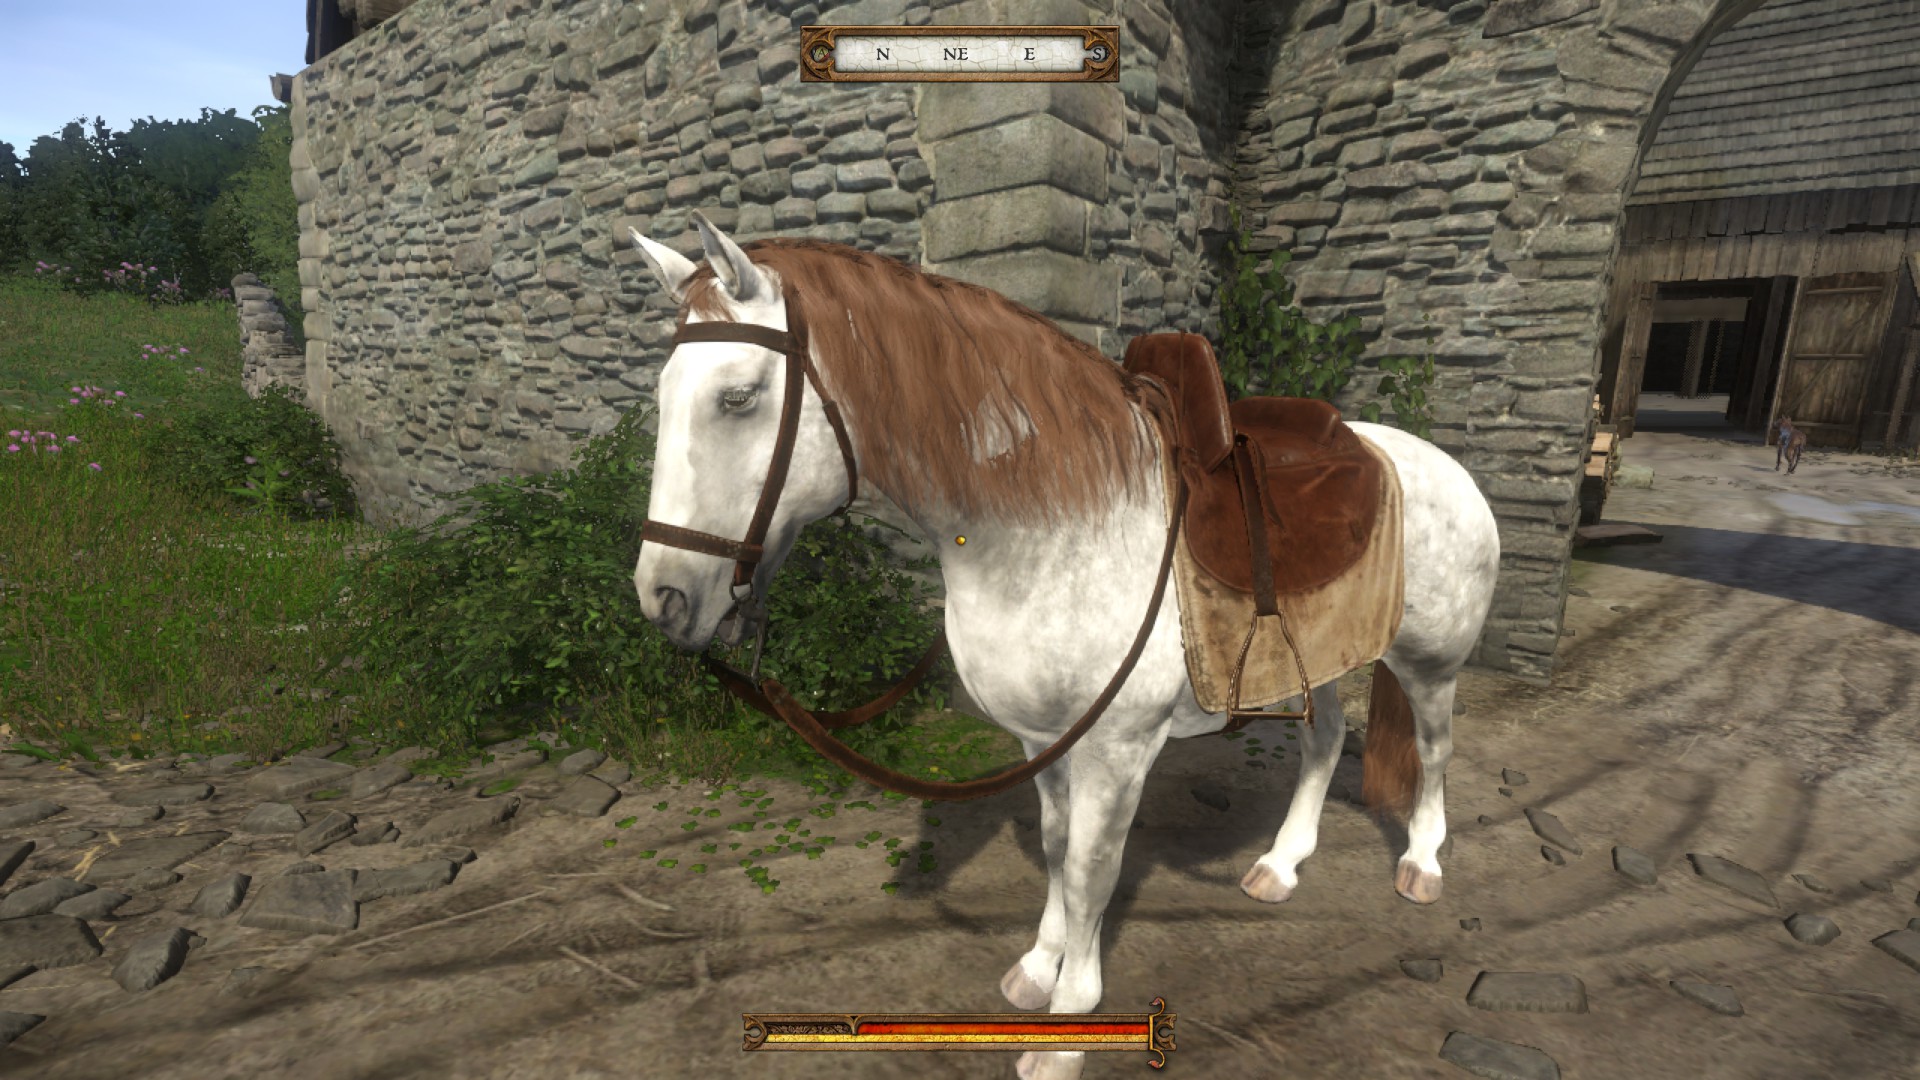 Steam Community Screenshot 哇 这白马也太漂亮了吧 还会抖耳朵 嗯 我觉得真该出个养马驯马系统 最好能喂马刷马 什么的